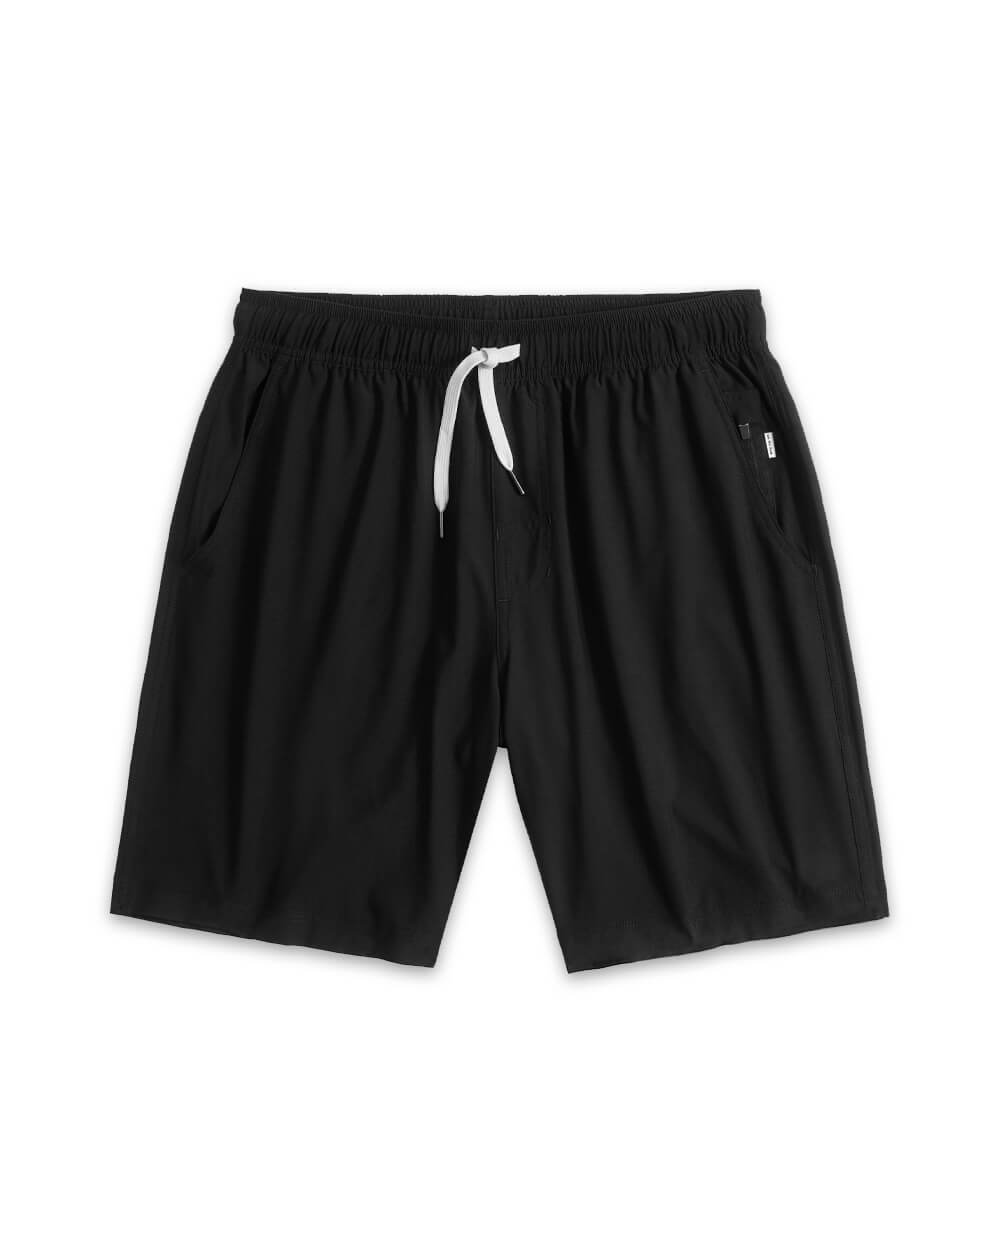 Dynamic Training Shorts - Black